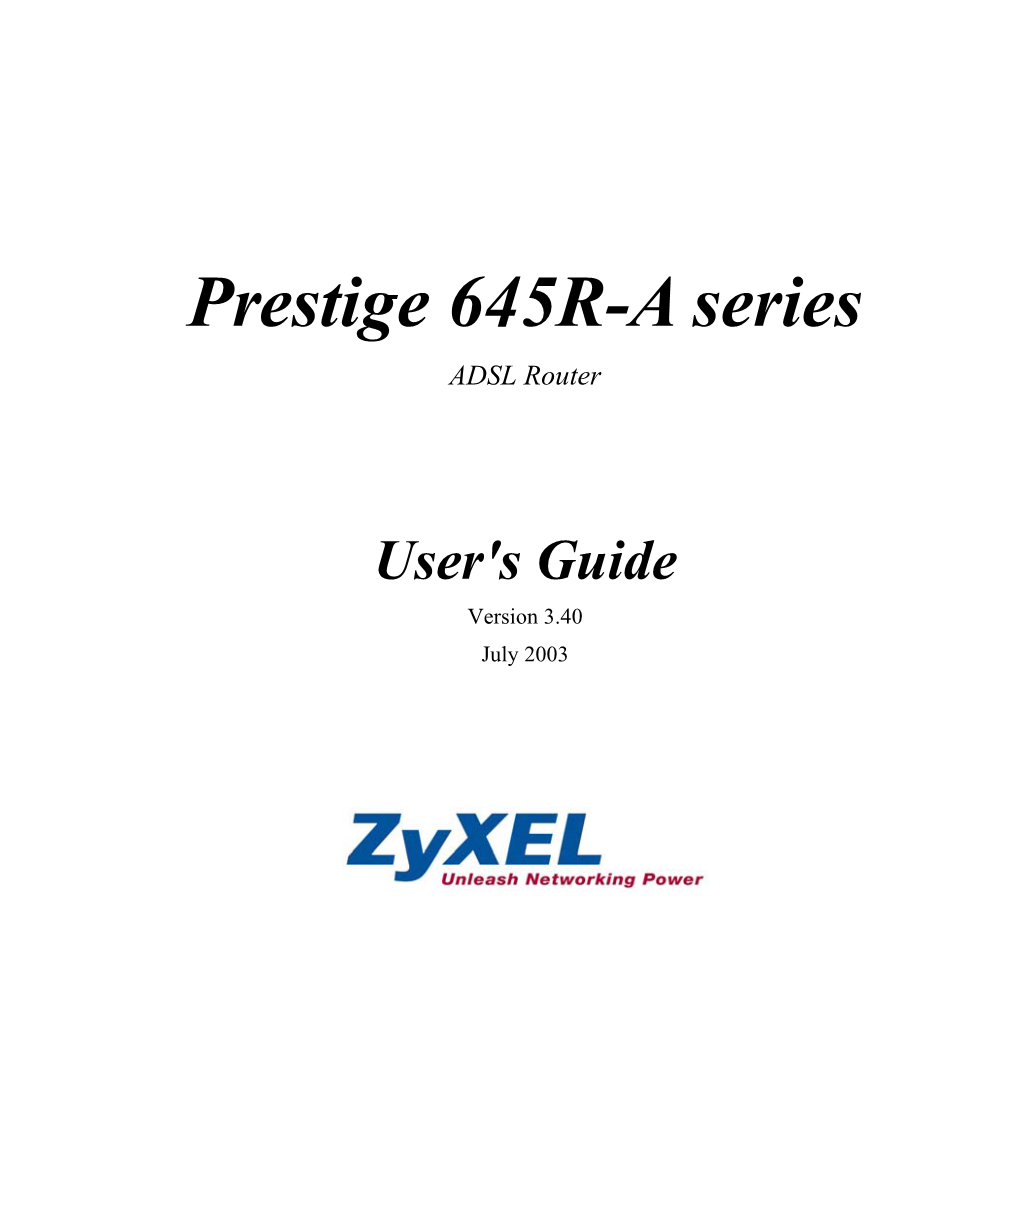 Prestige 645R-A Series ADSL Router